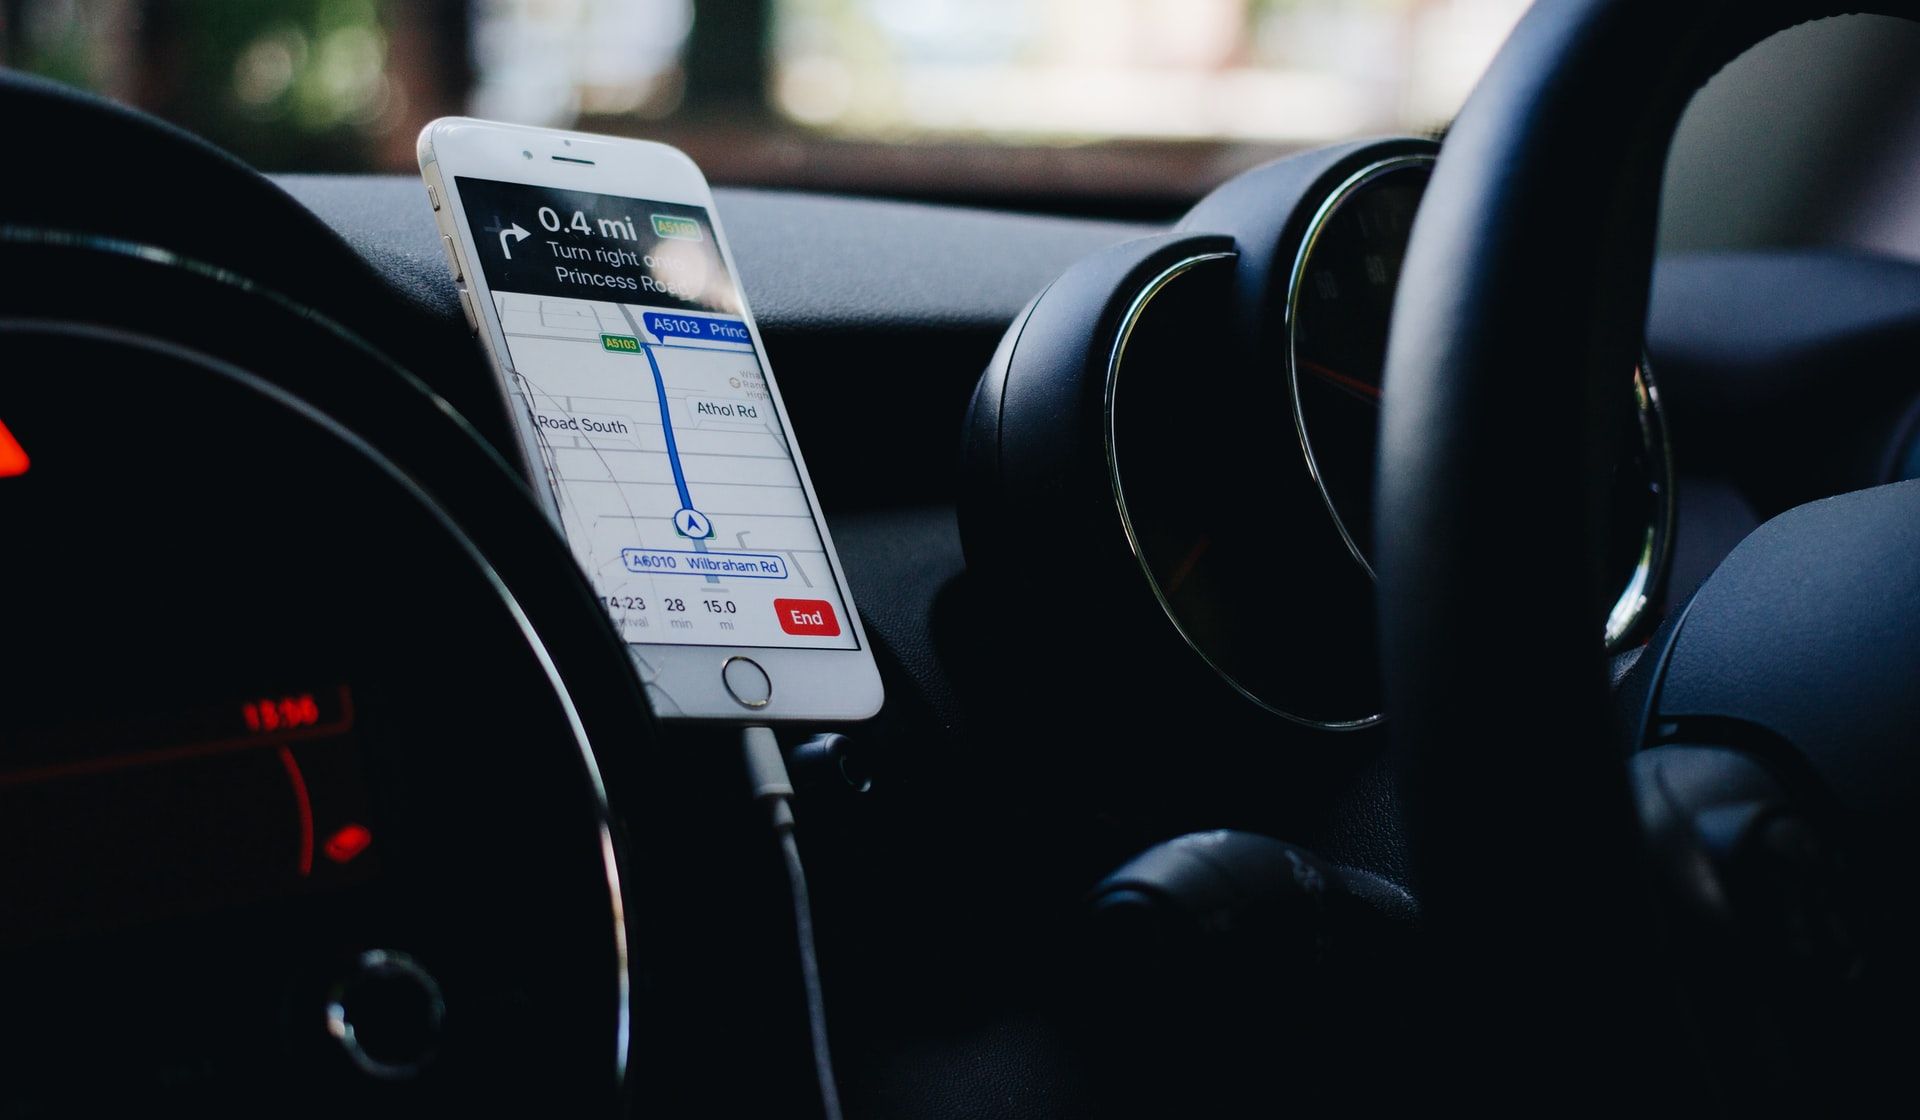 phone-navigation-in-car